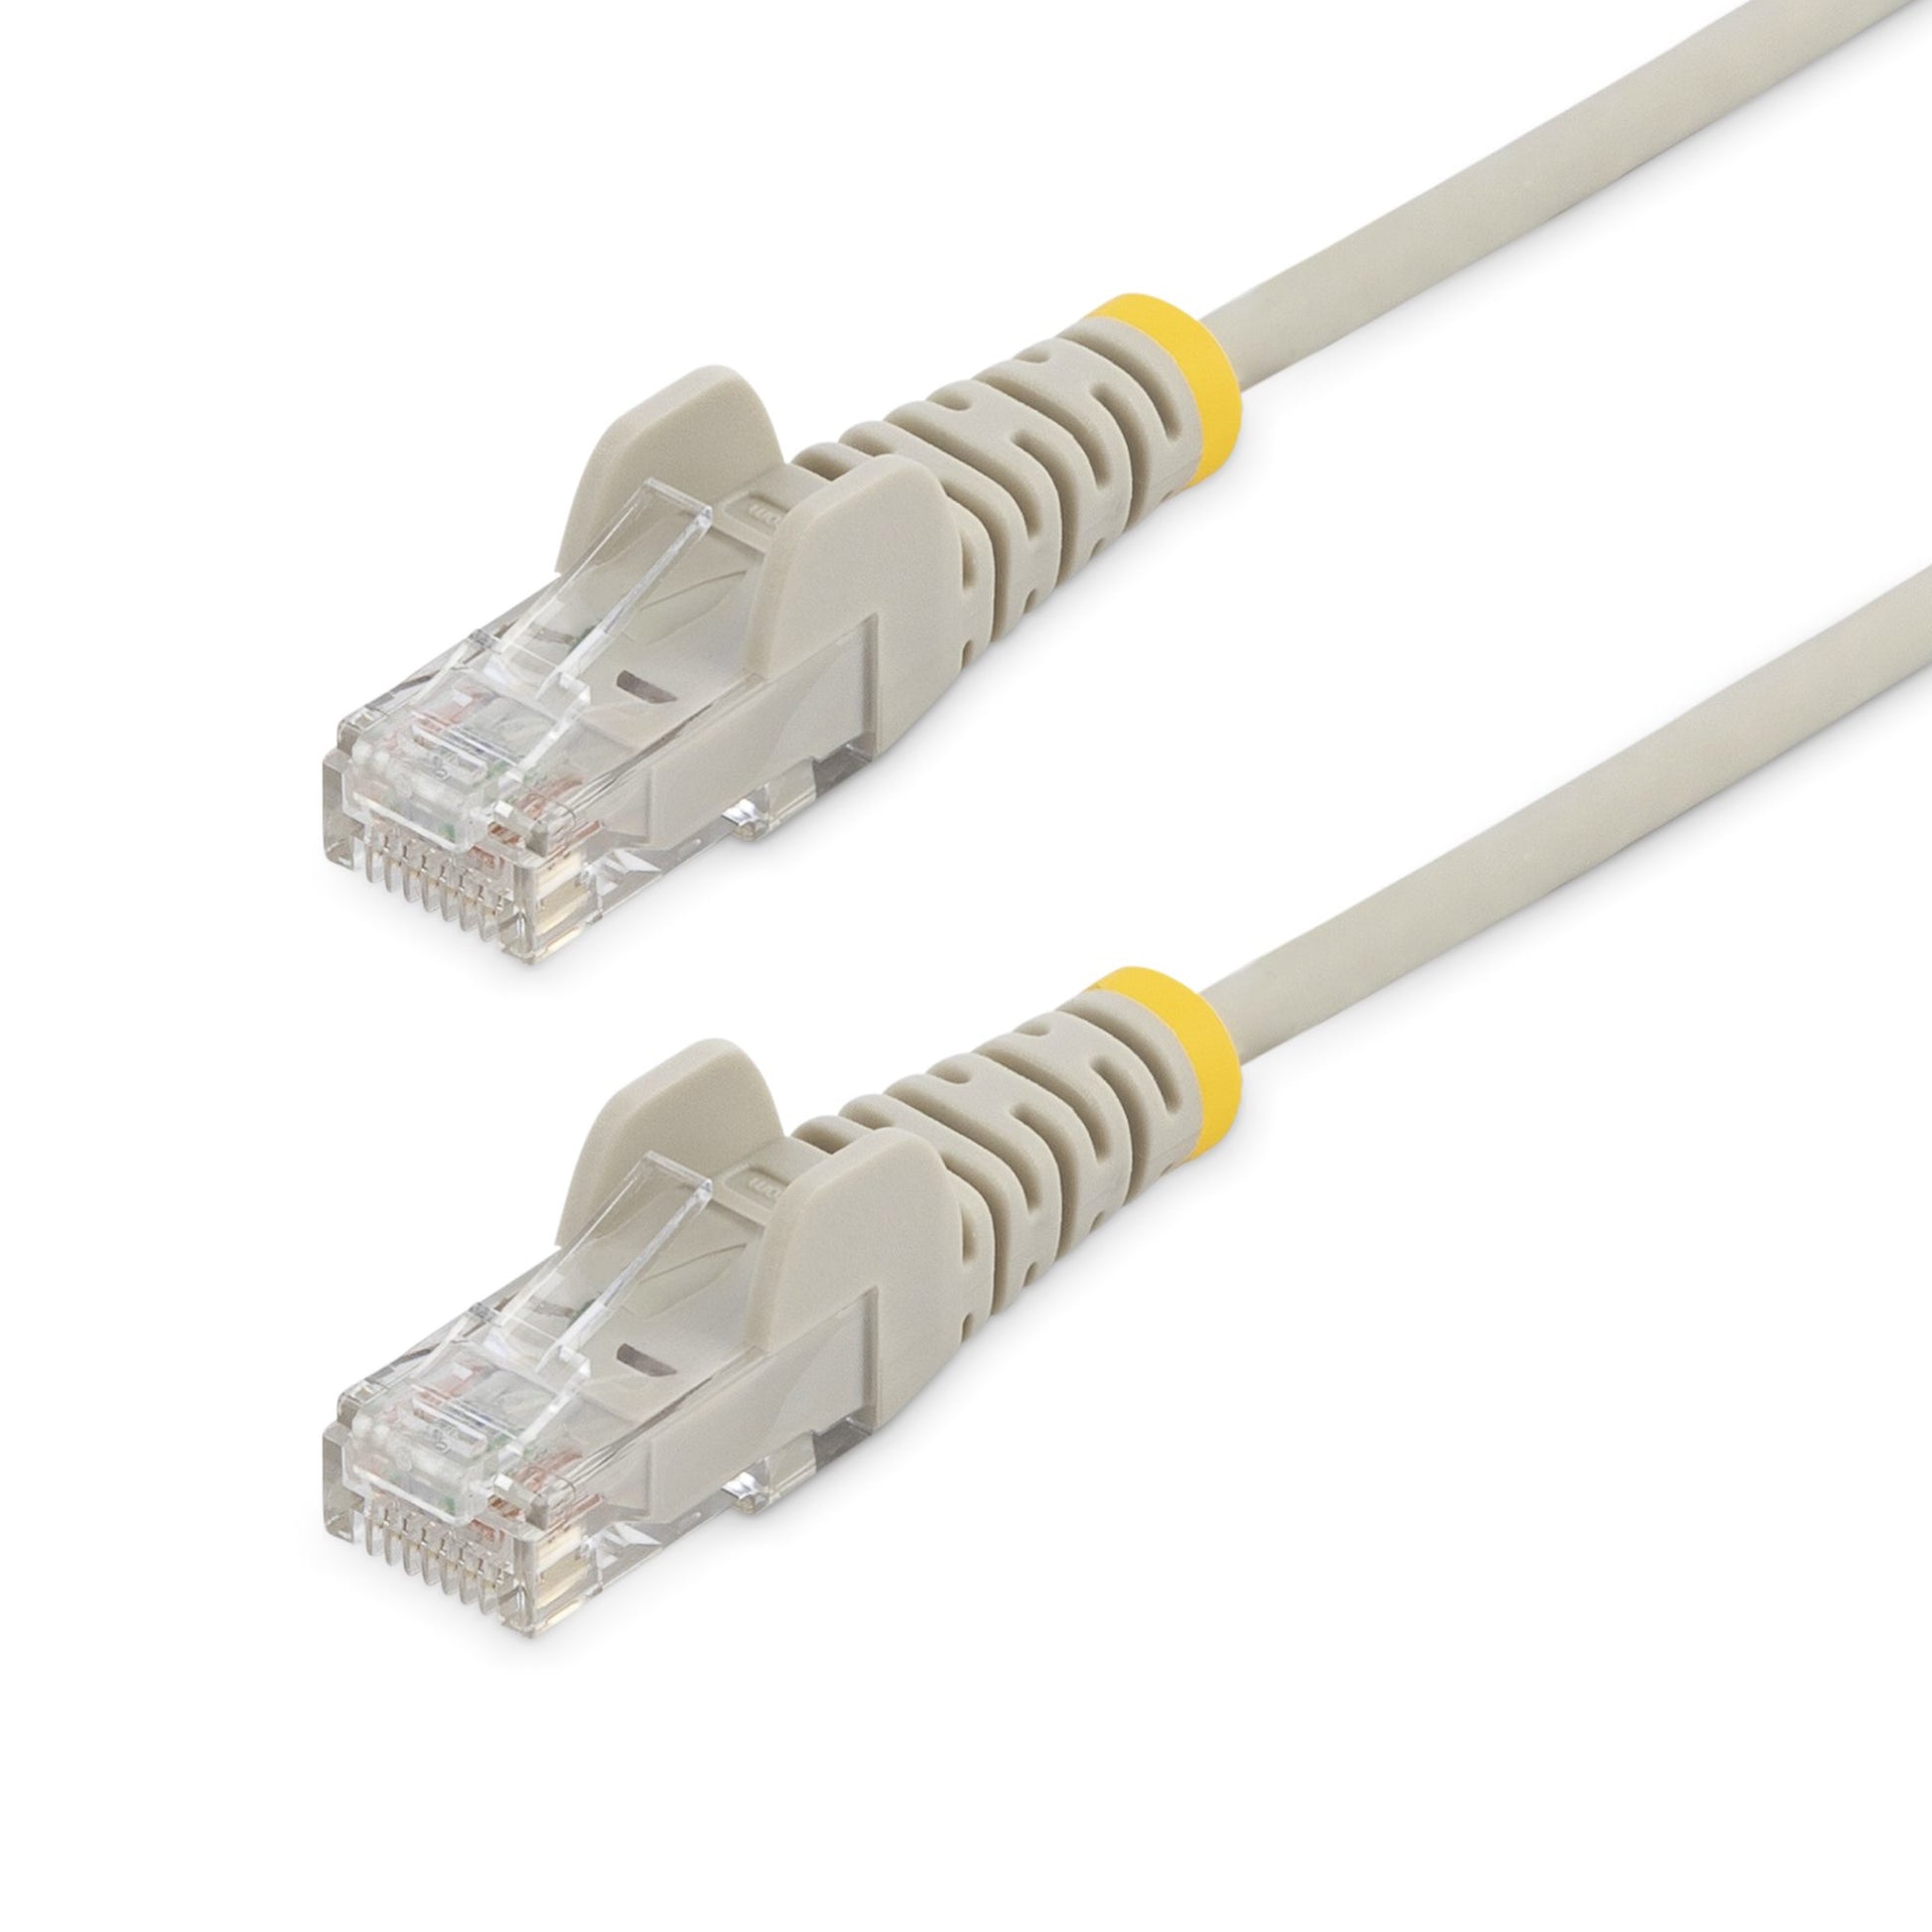 StarTech.com 1 m CAT6 Cable - Slim - Snagless RJ45 Connectors - Grey-0